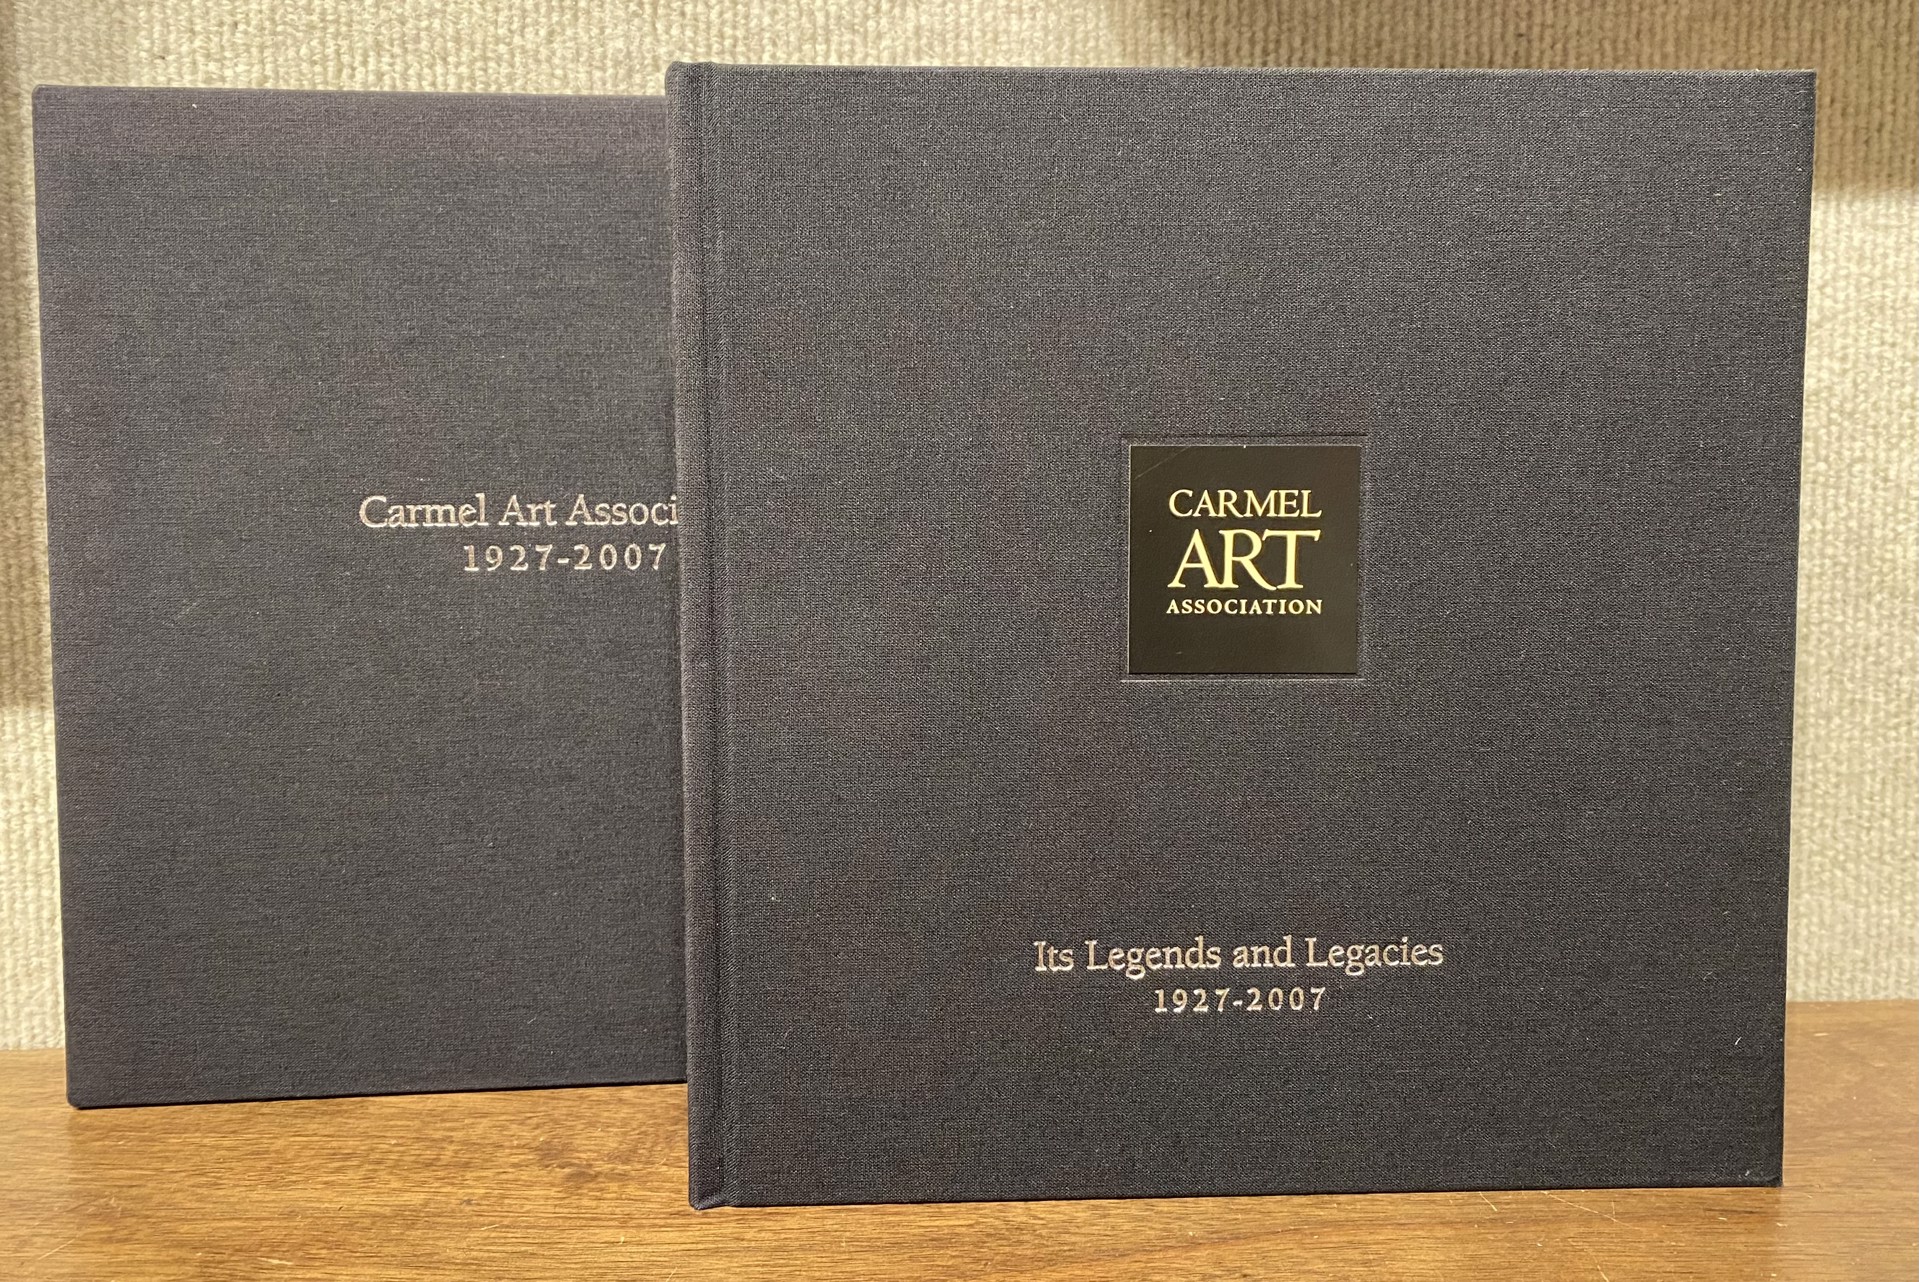 CAA: Its Legends & Legacies: 1927-2007 (hardcover) by CAA Carmel Art Association